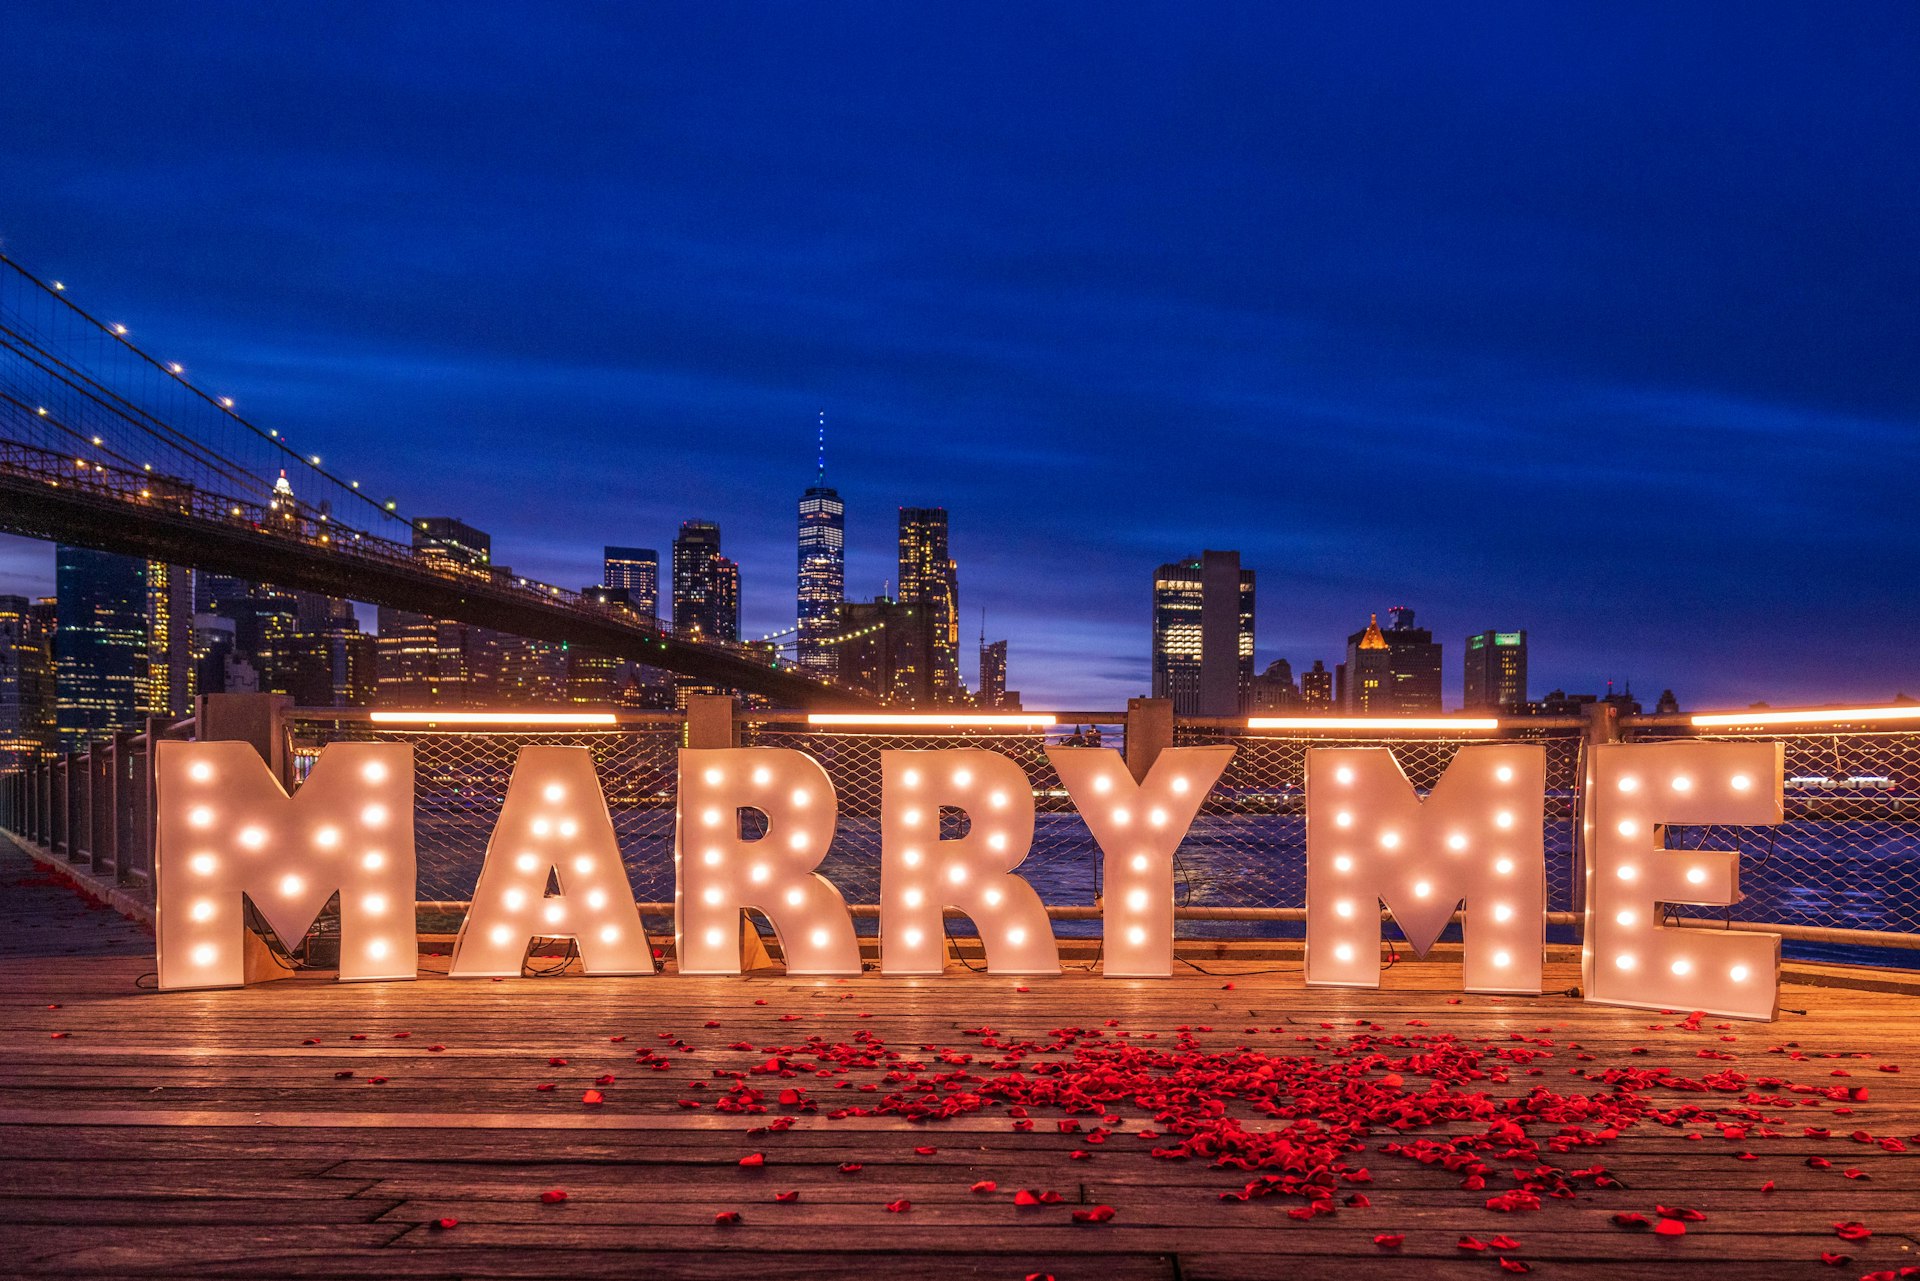 The phrase "Marry Me" lit up in Brooklyn Bridge Park, Brooklyn, NY